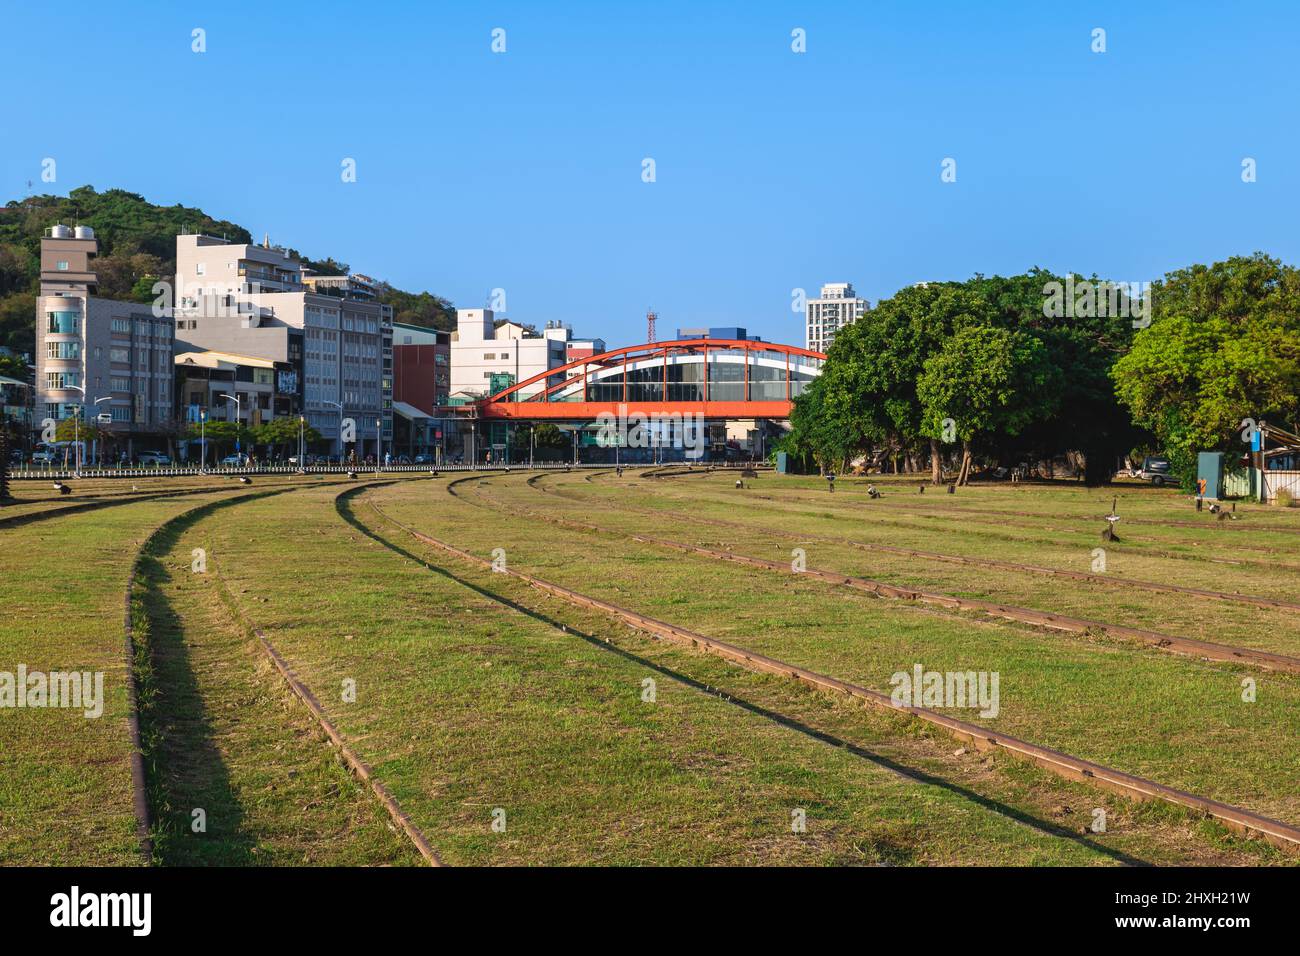 Parque cultural del ferrocarril de Hamasen, originalmente la estación portuaria de Kaohsiung, en kaohsiung, taiwán Foto de stock